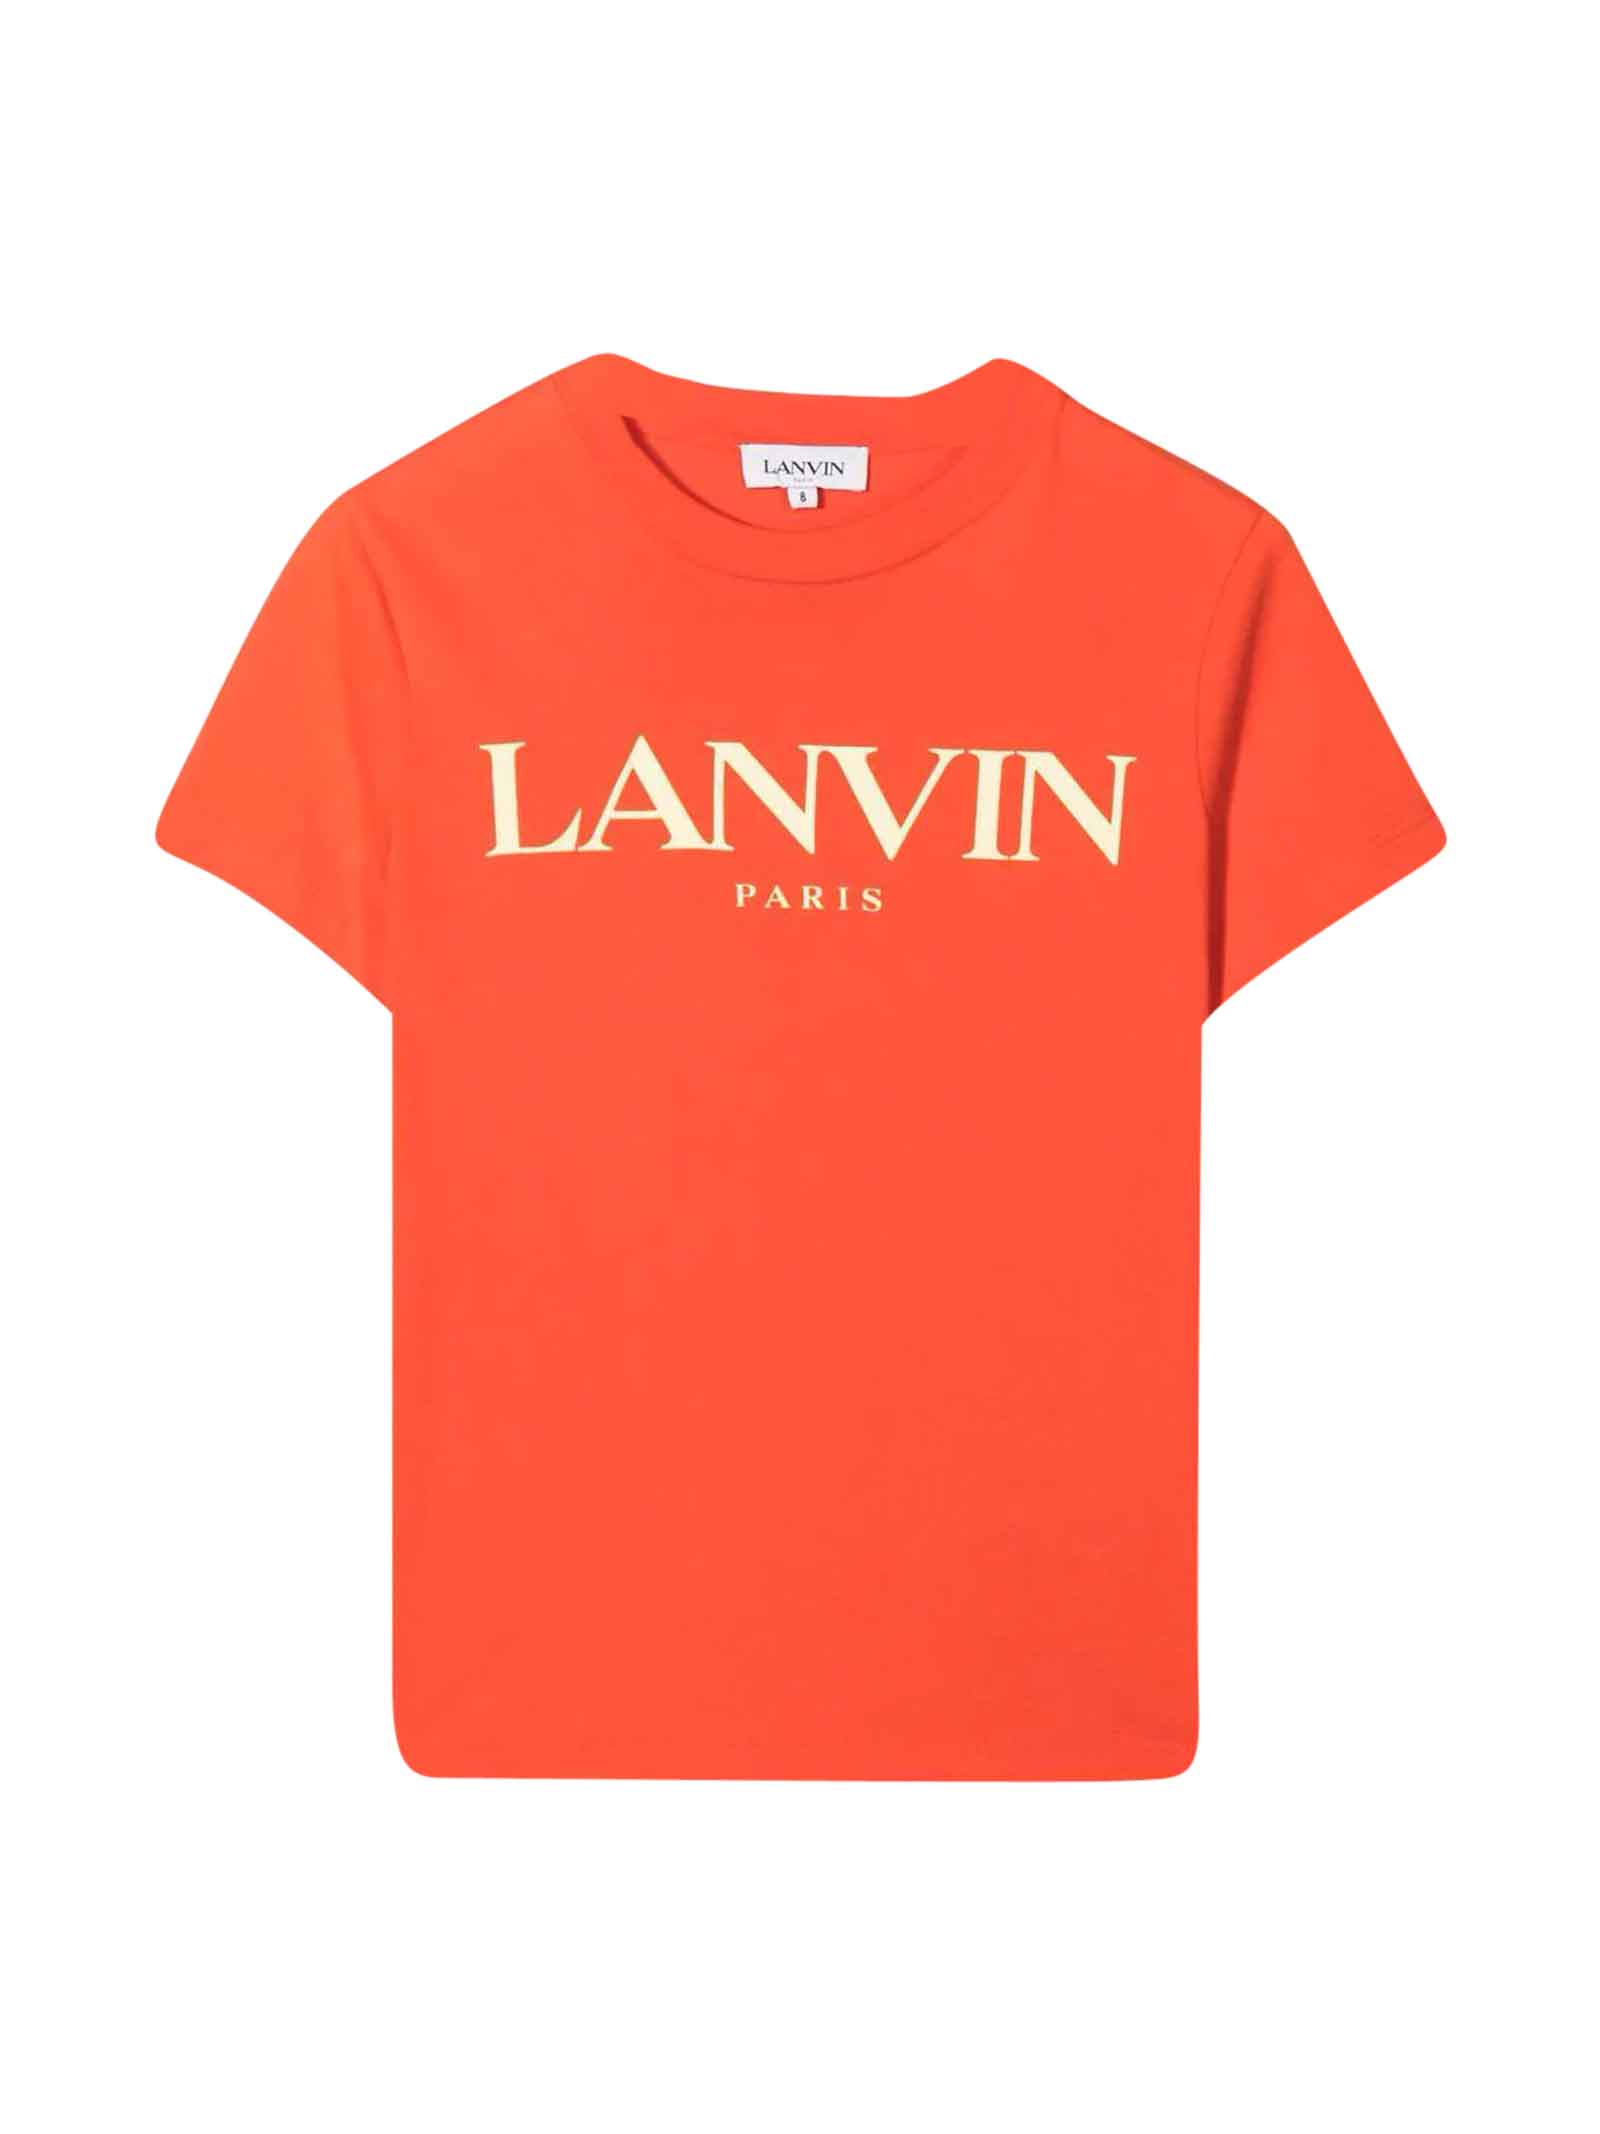 LANVIN Clothing for Boys | ModeSens